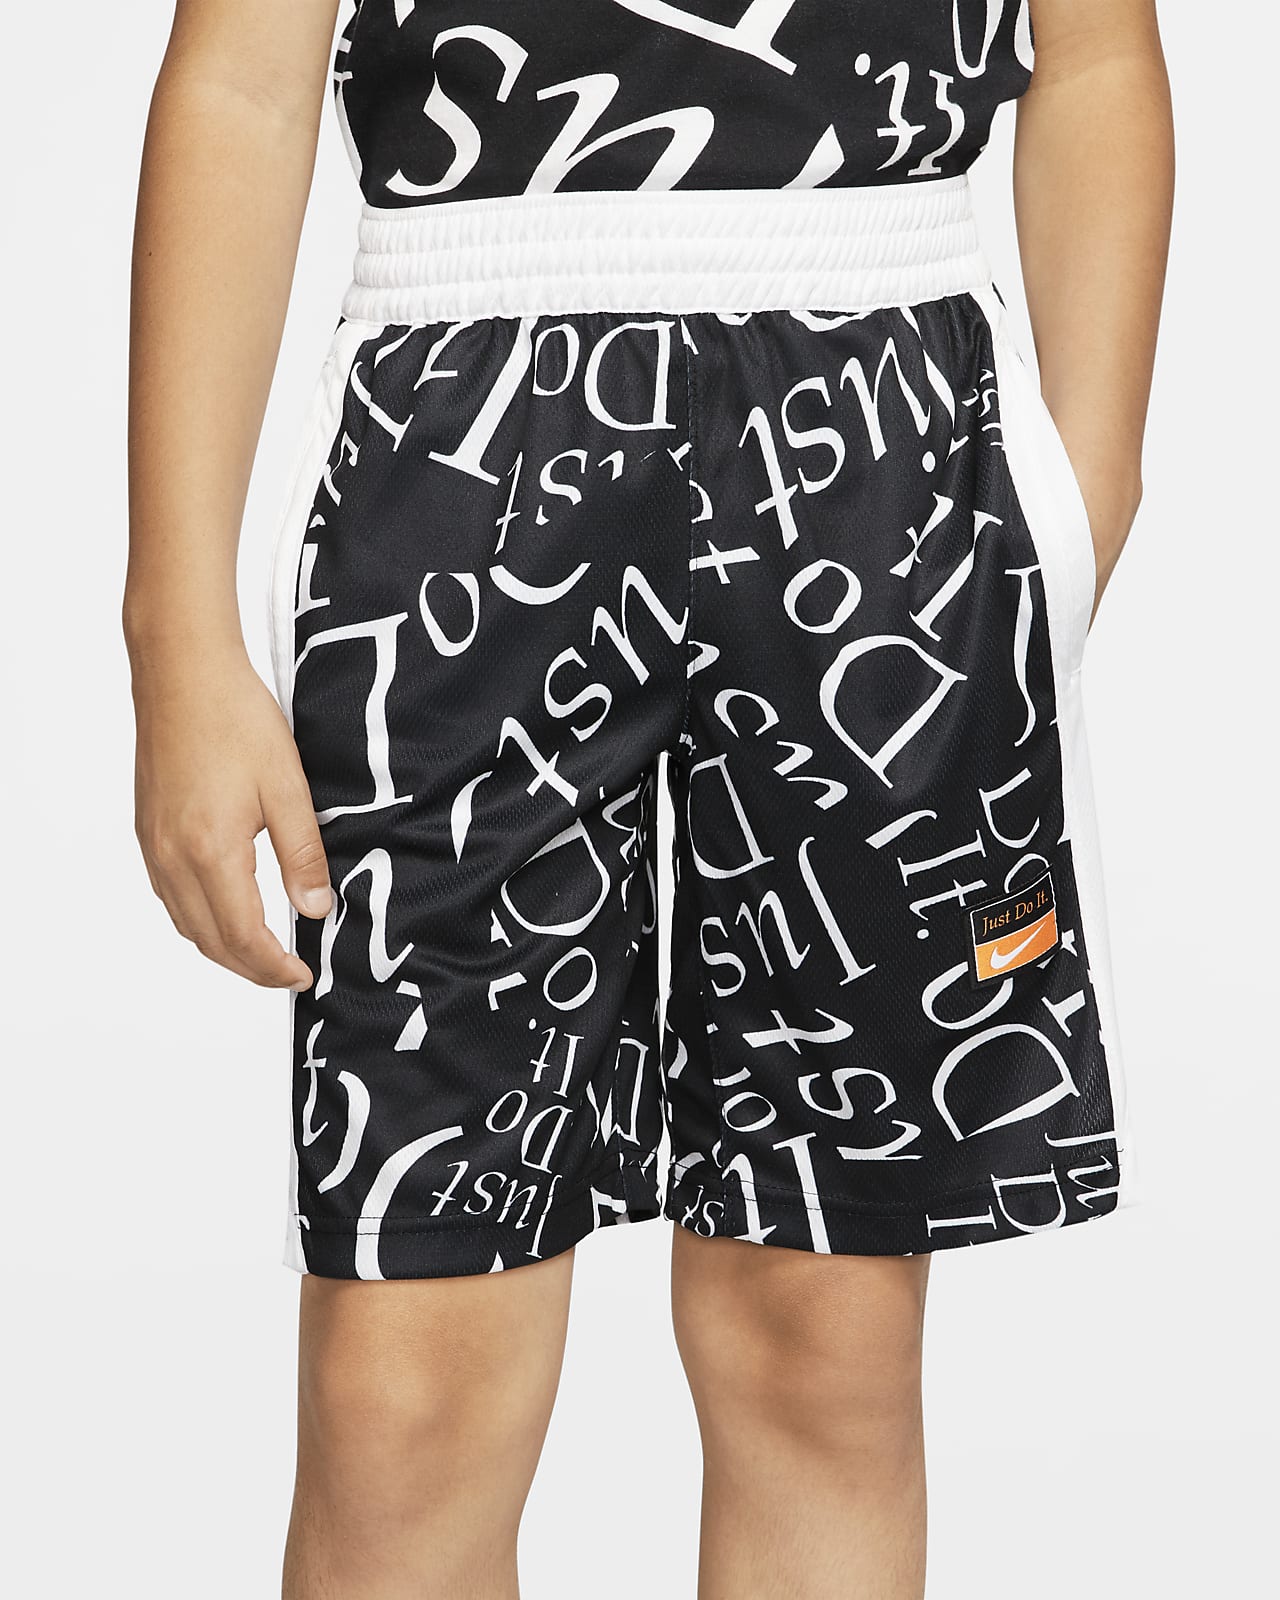 Nike Kids Basketball Shorts Hot Sale, 58% OFF | www.ingeniovirtual.com